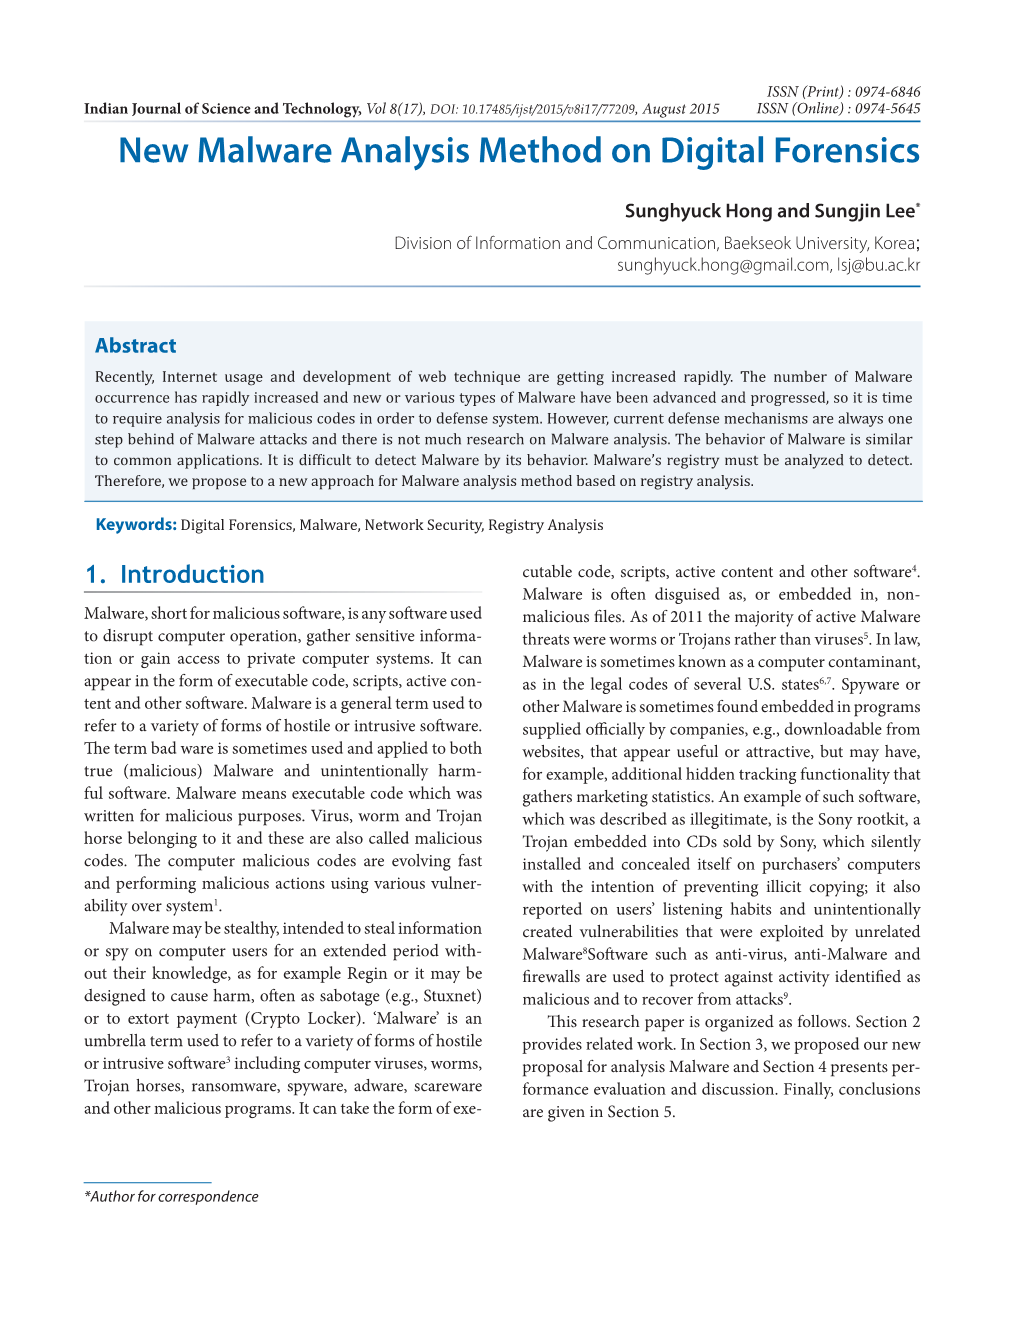 New Malware Analysis Method on Digital Forensics